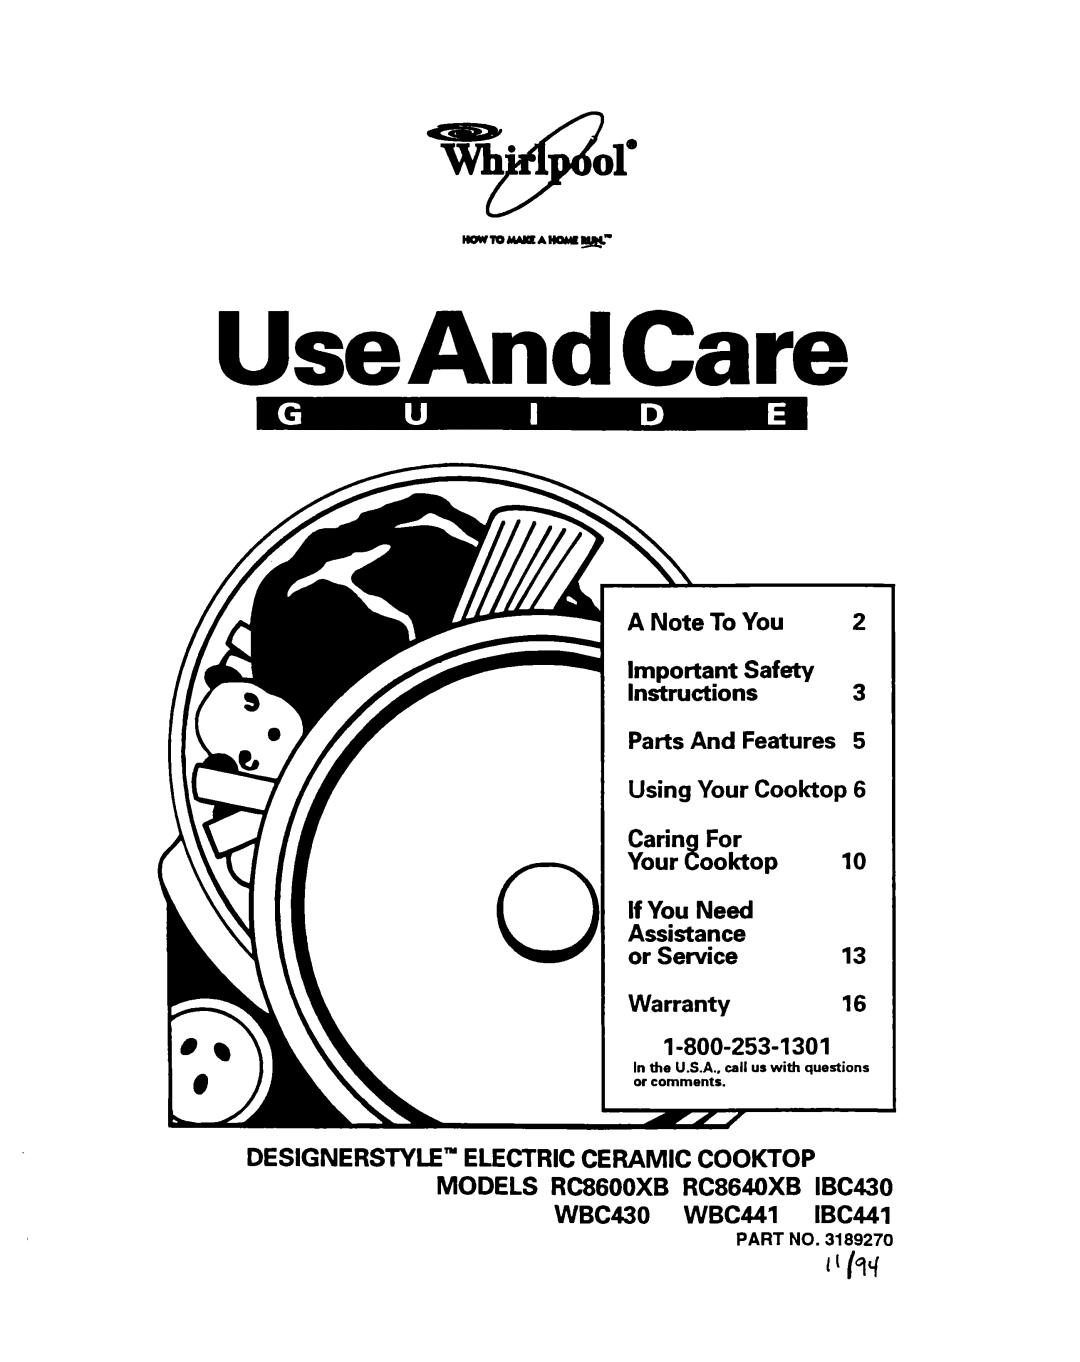 Whirlpool RC864OXB important safety instructions UseAndCare, wh 01” H, nawloAtAKE*mwu~ 